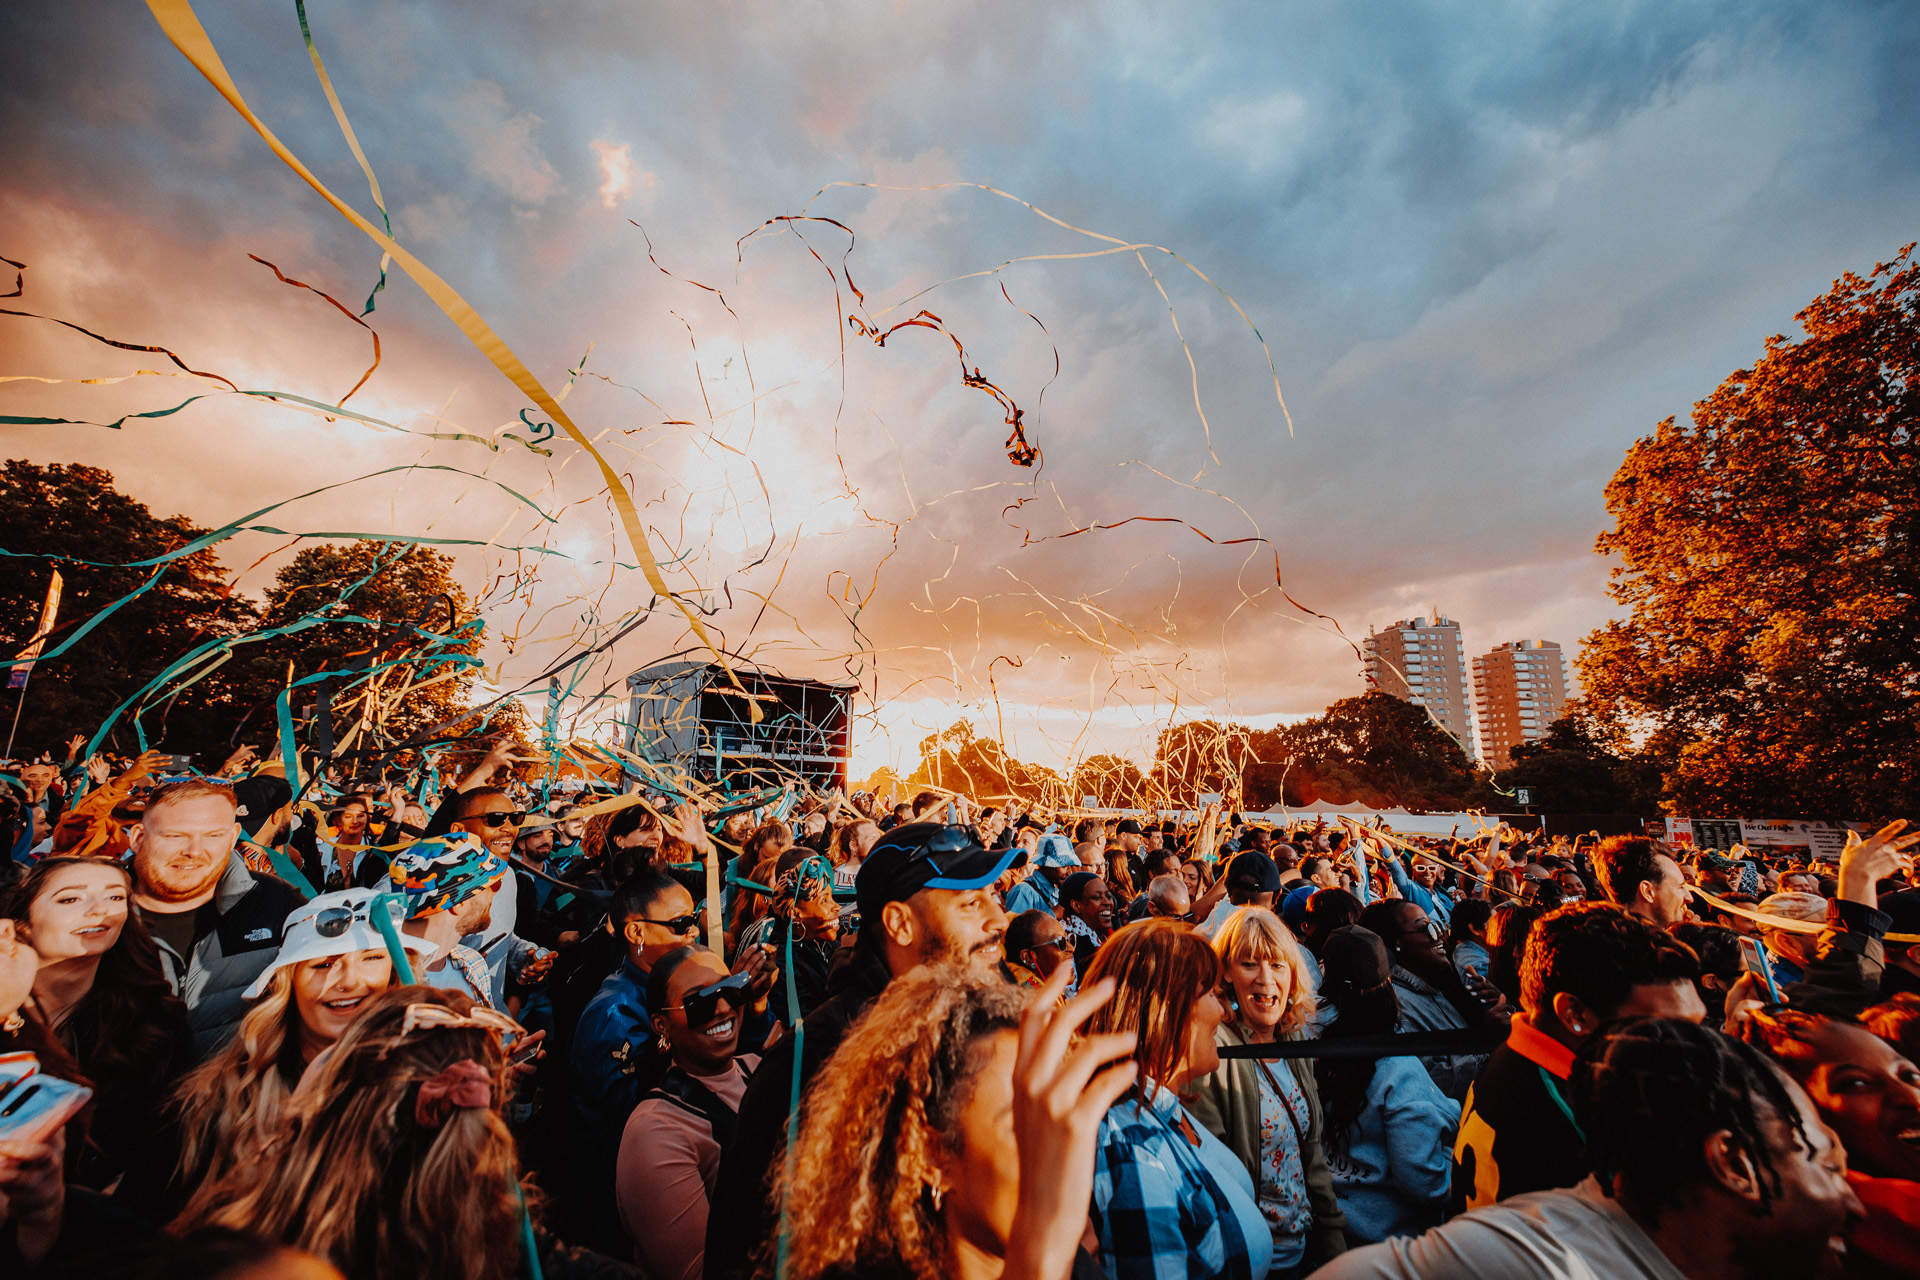 The crowd at London festival City Splash in 2022